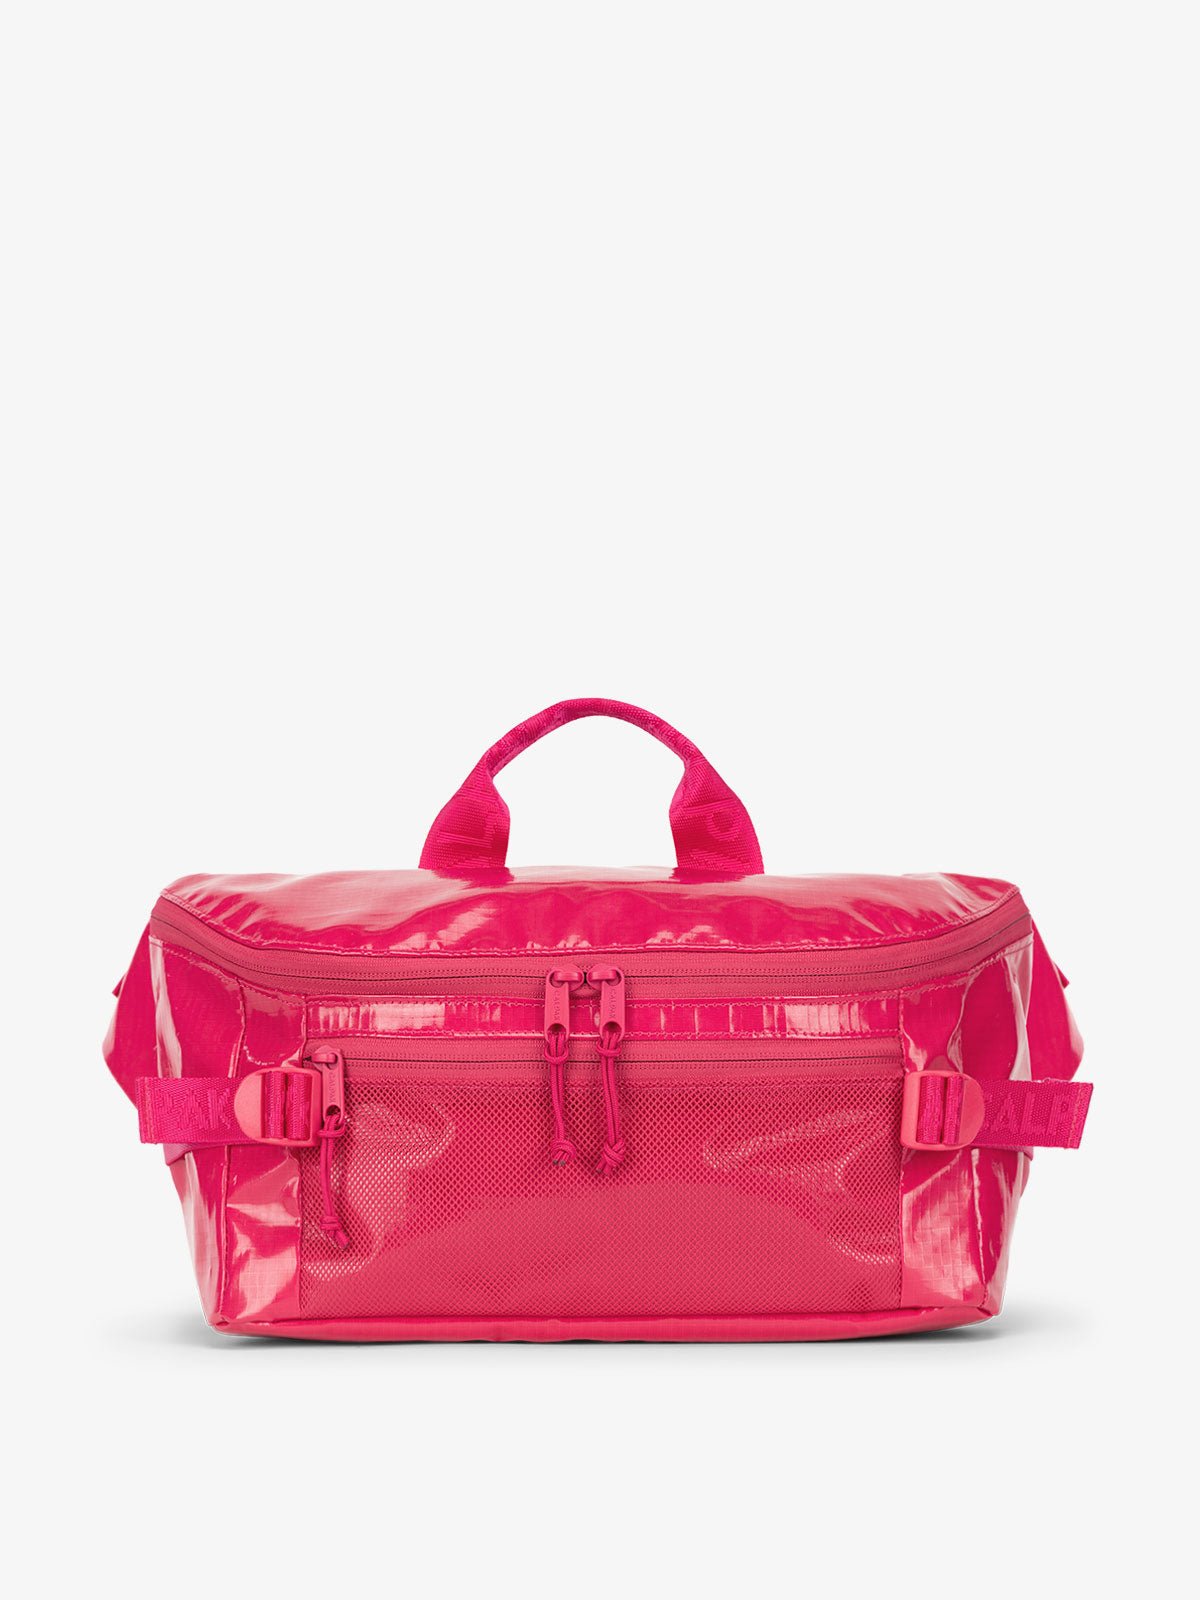 CALPAK Terra Sling Bag with mesh front pocket and top handle in pink dragonfruit